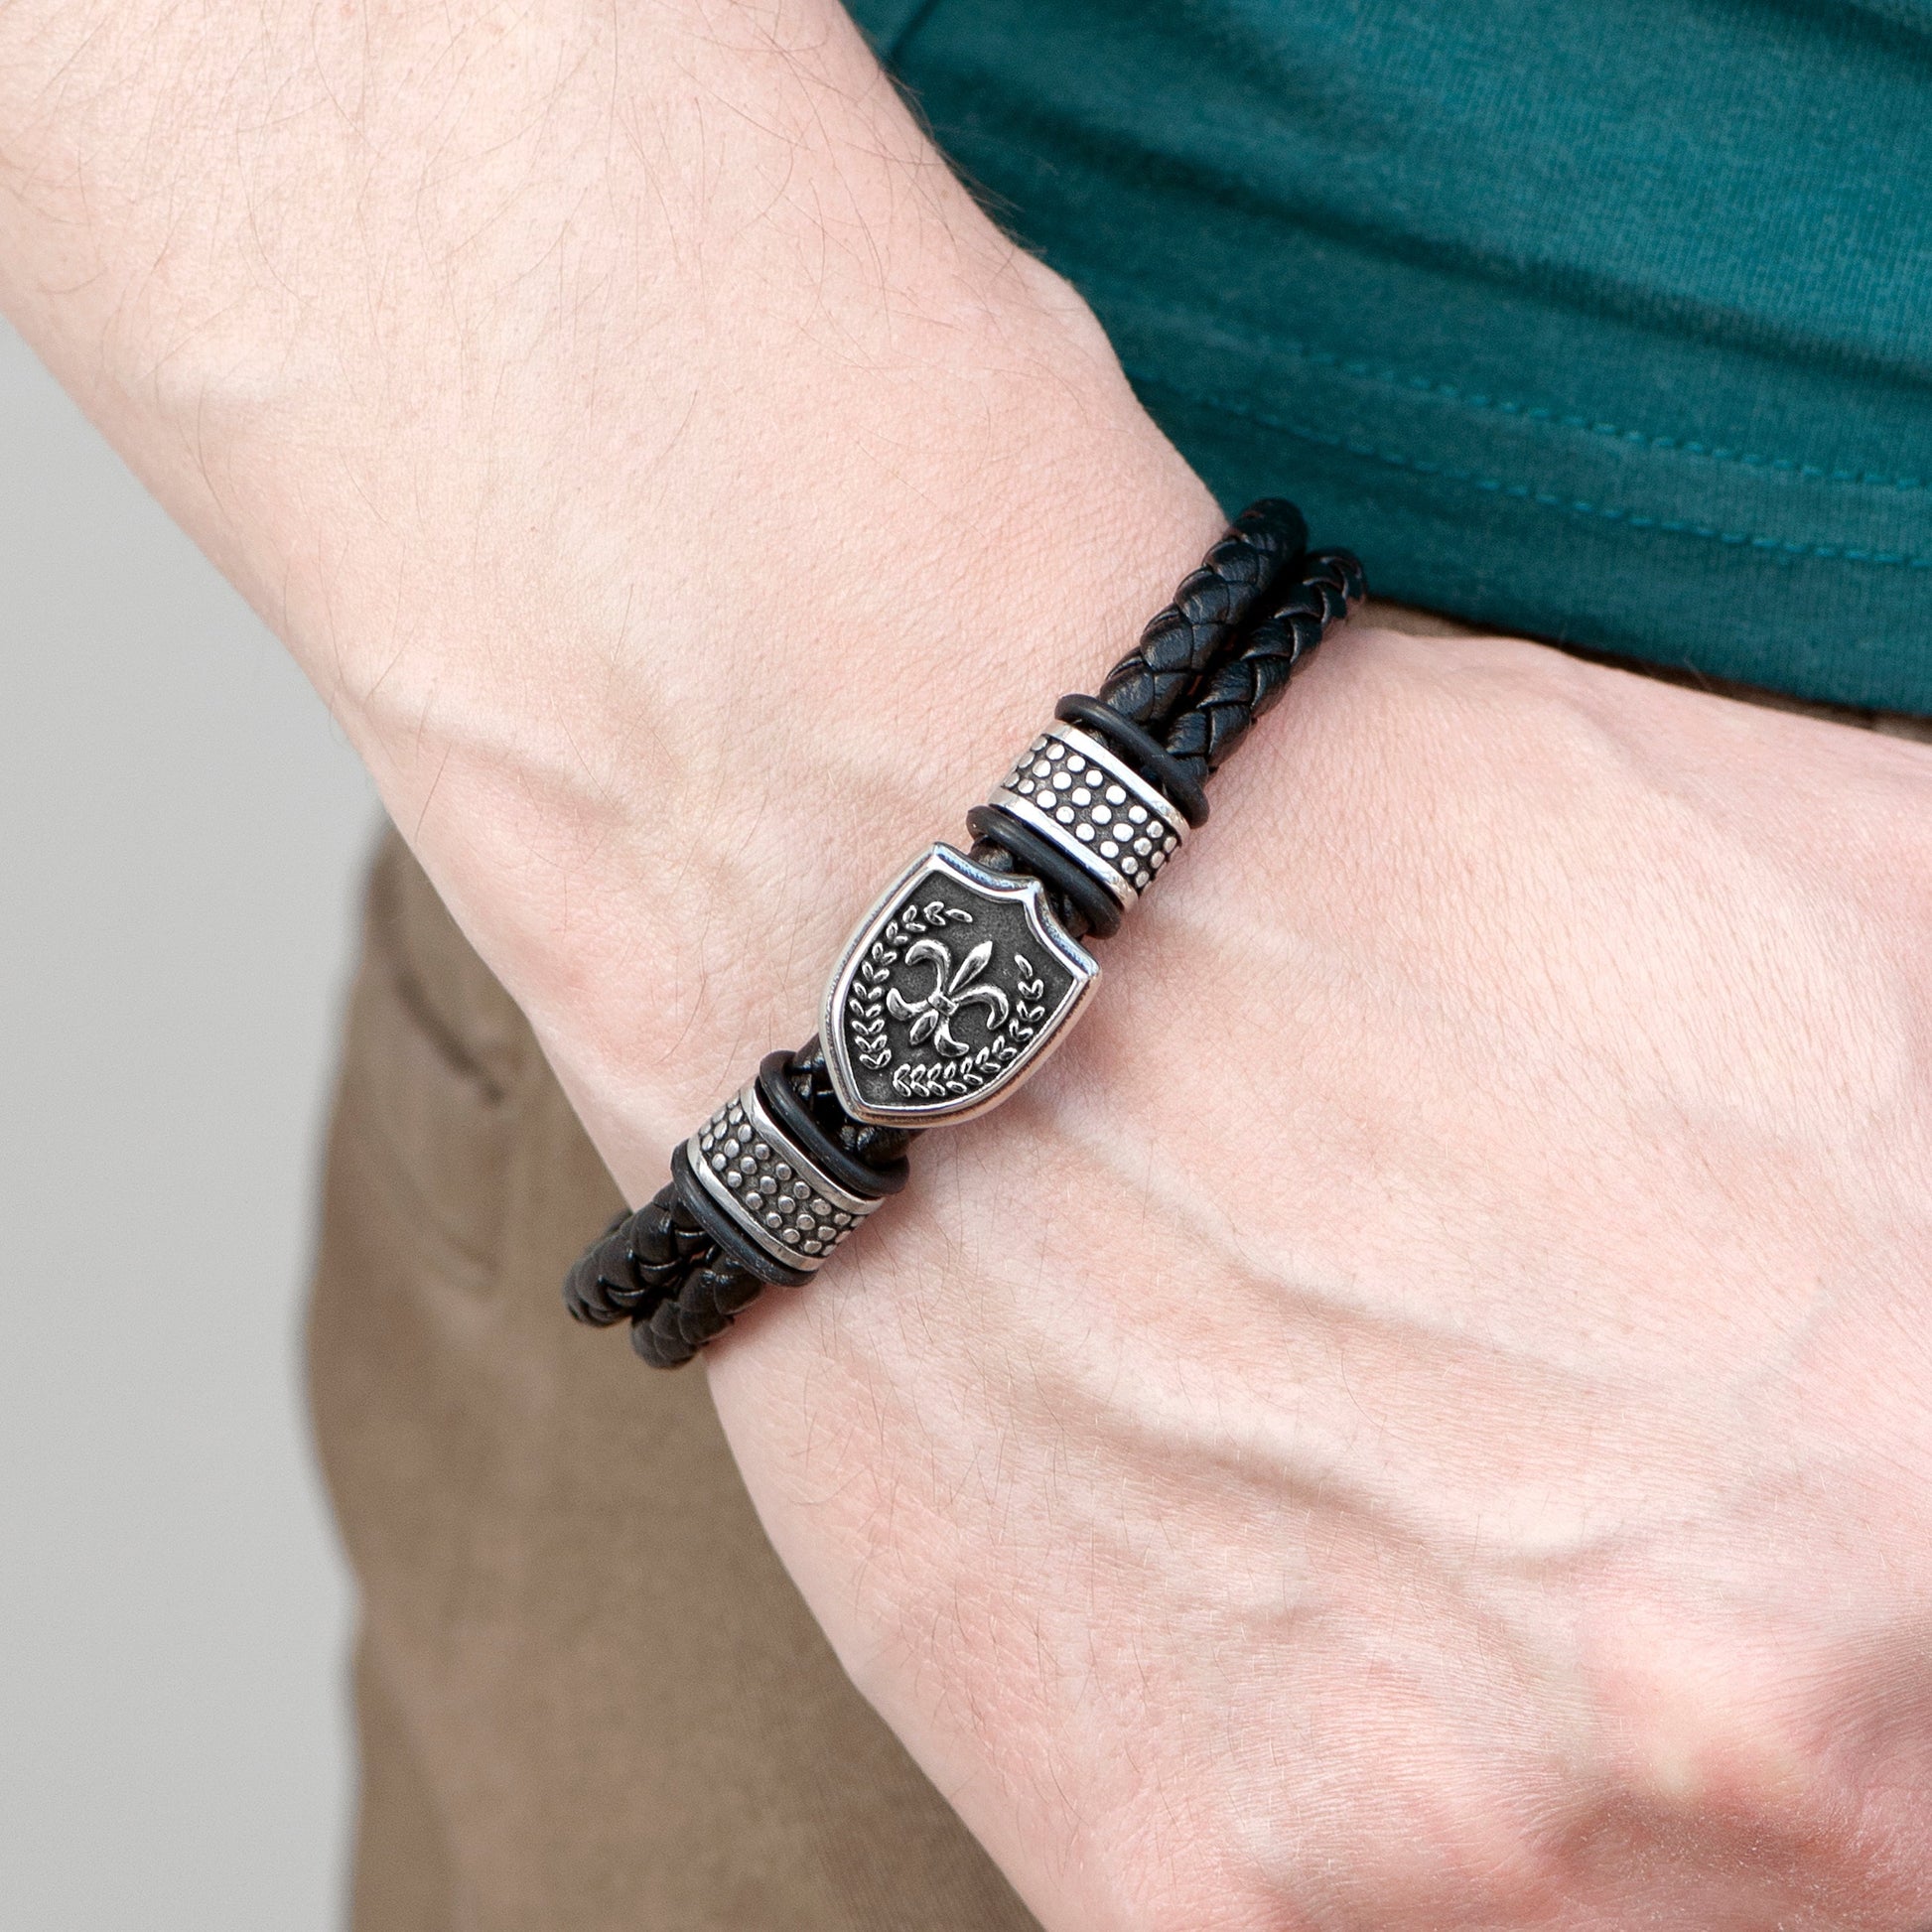 Personalized Men's Bracelets - Personalized Men's Warrior Shield Leather Bracelet 